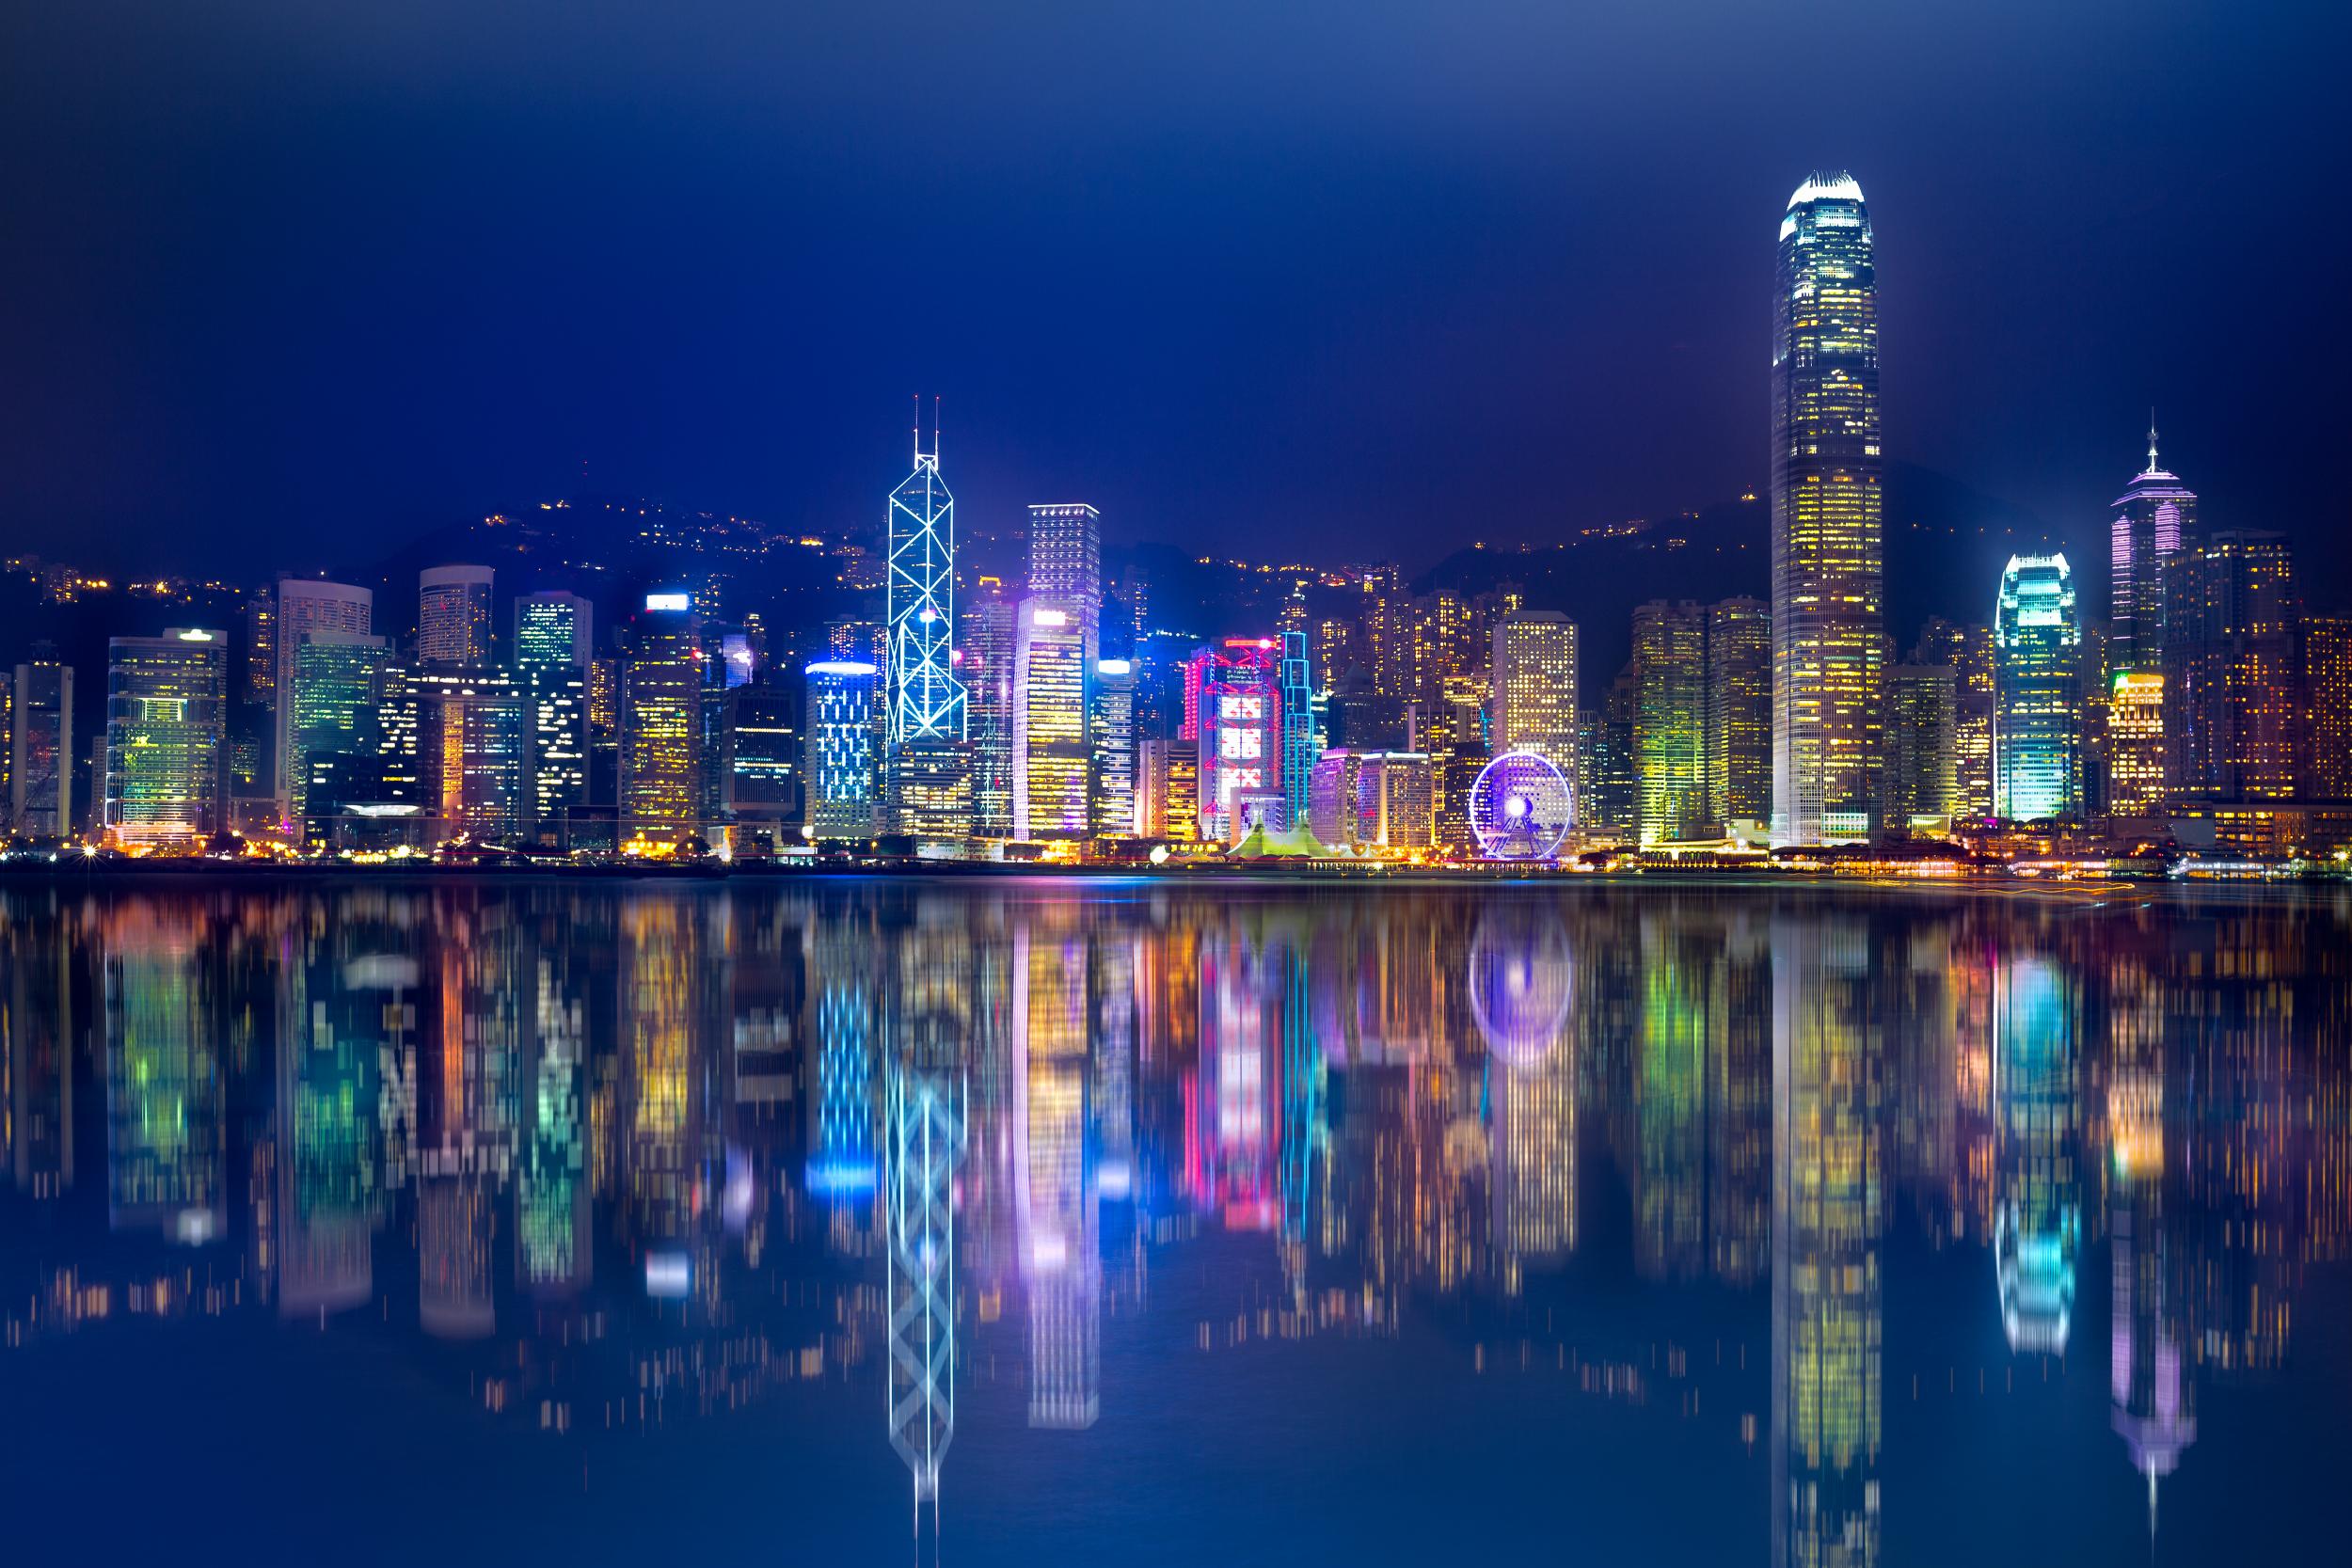 Flights to Hong Kong can include connections at EU hubs